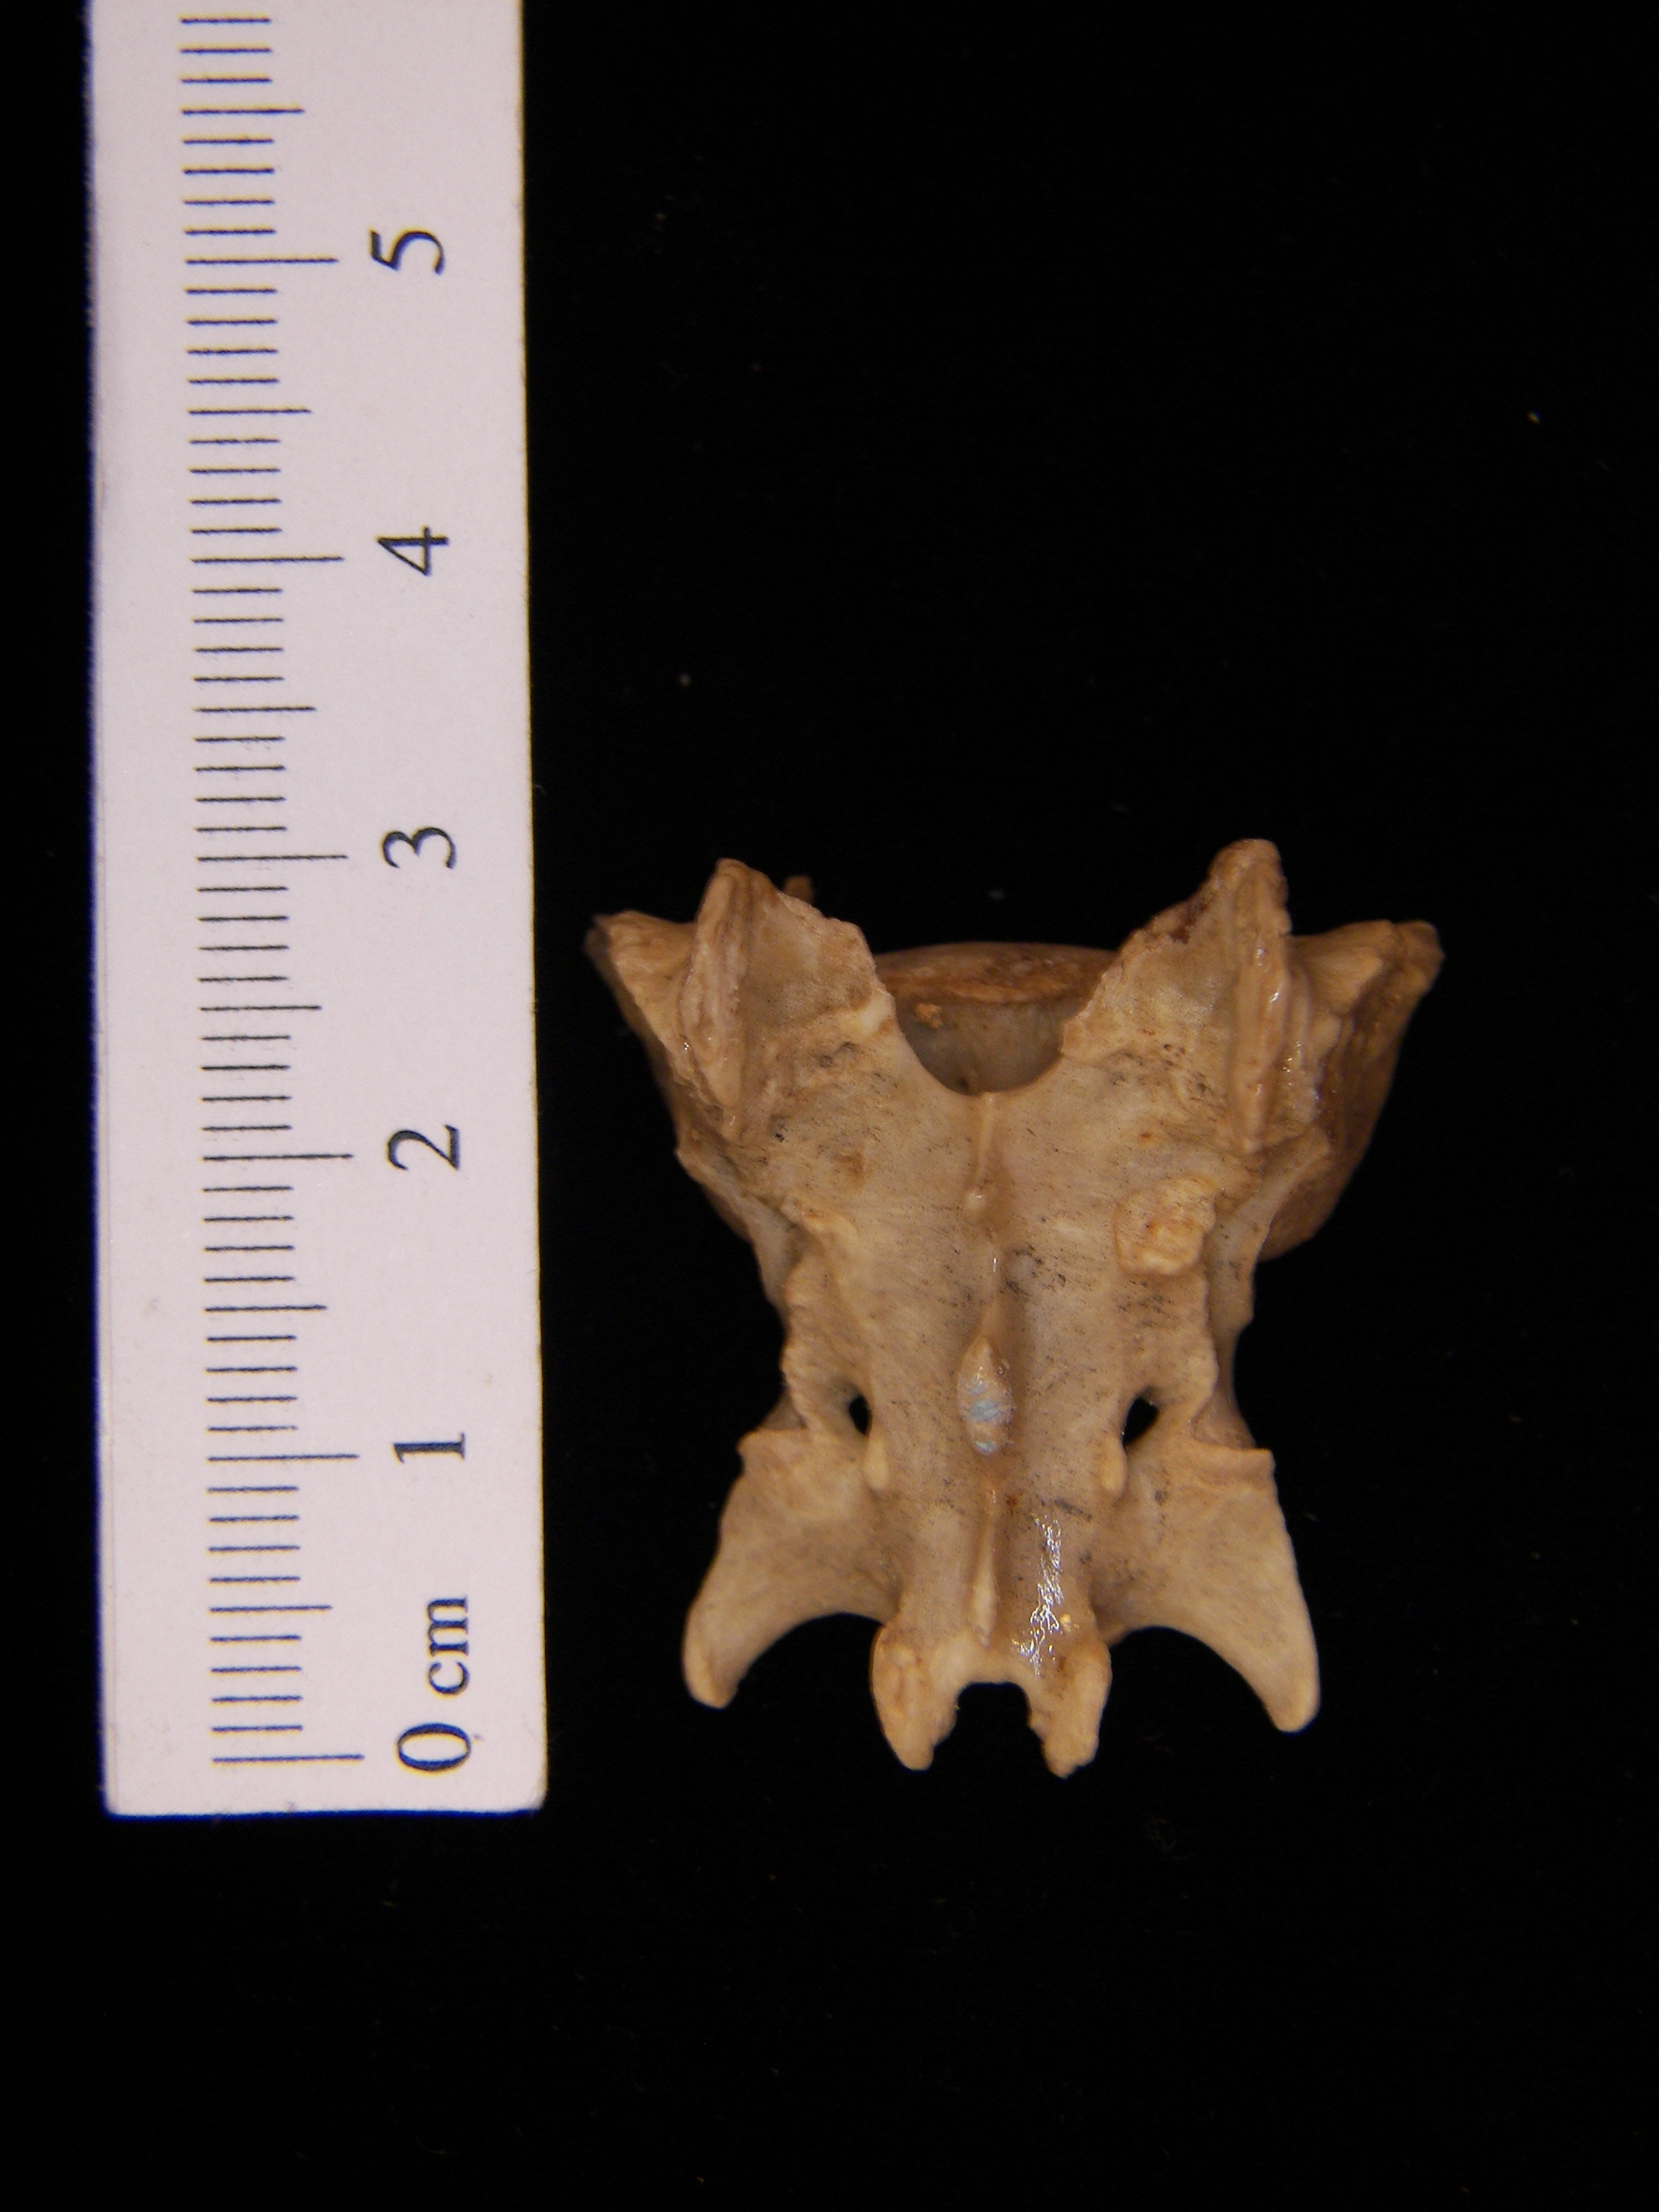 sacral vertebrae cat